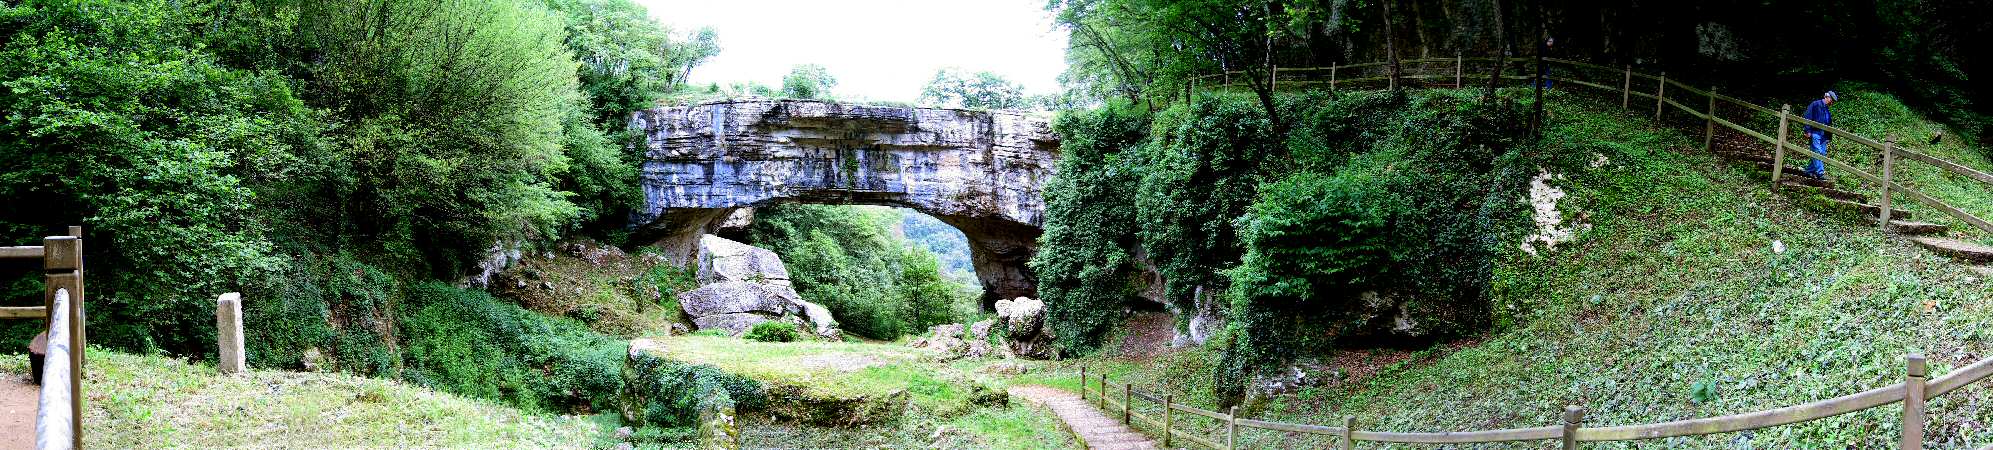 Ponte di Veja, Parco Naturale Regionale dei Monti Lessini, Verona